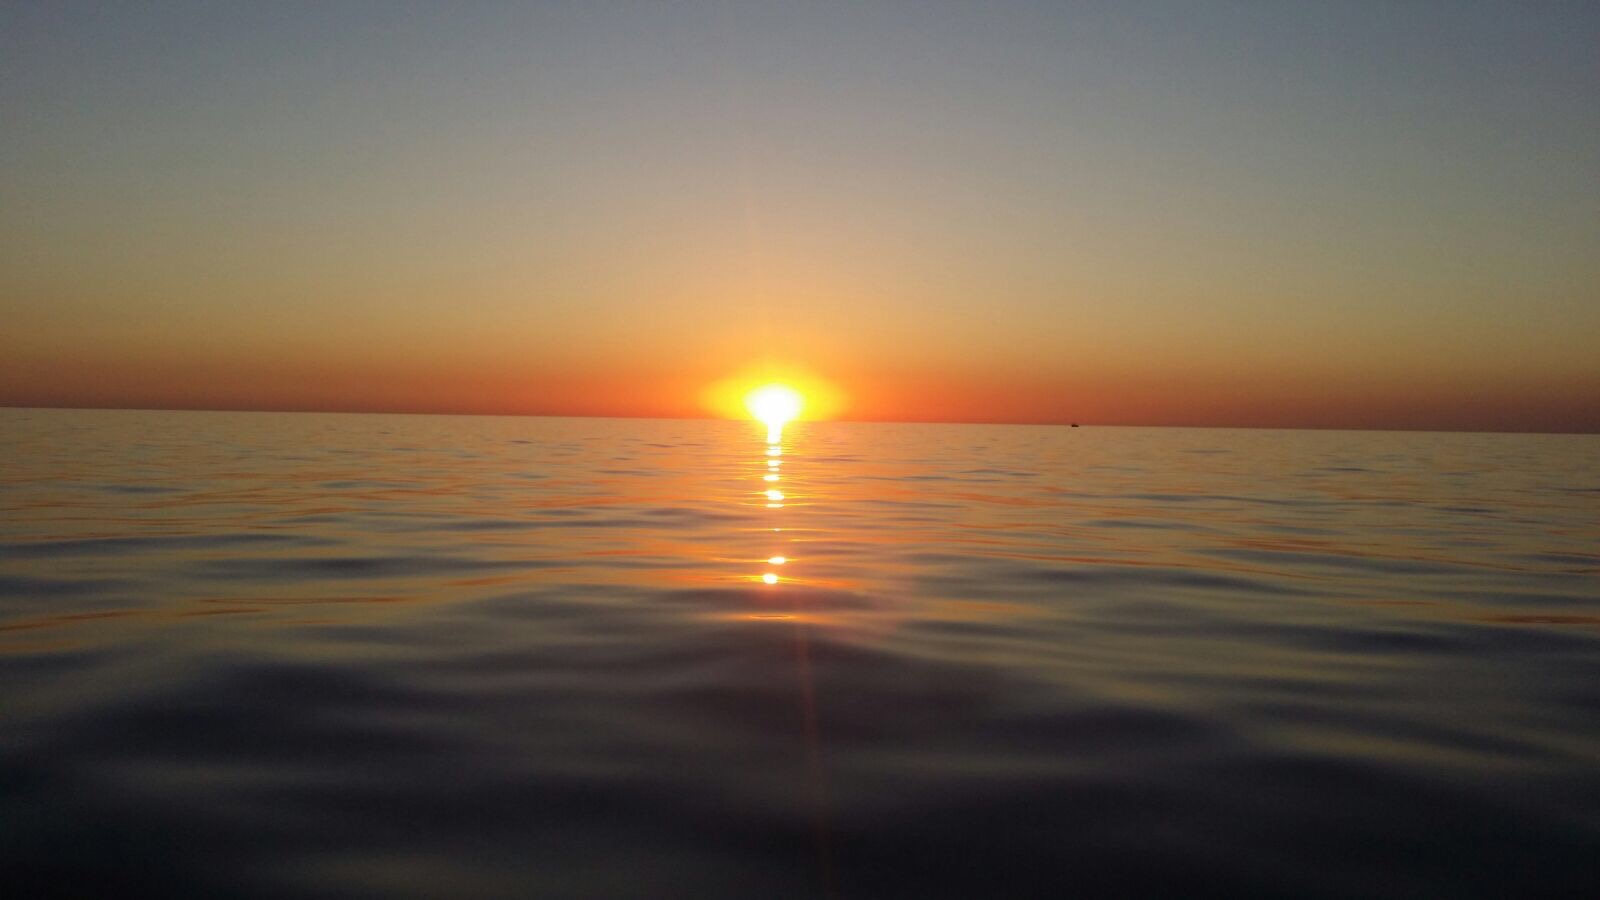 The sun rises through the sea